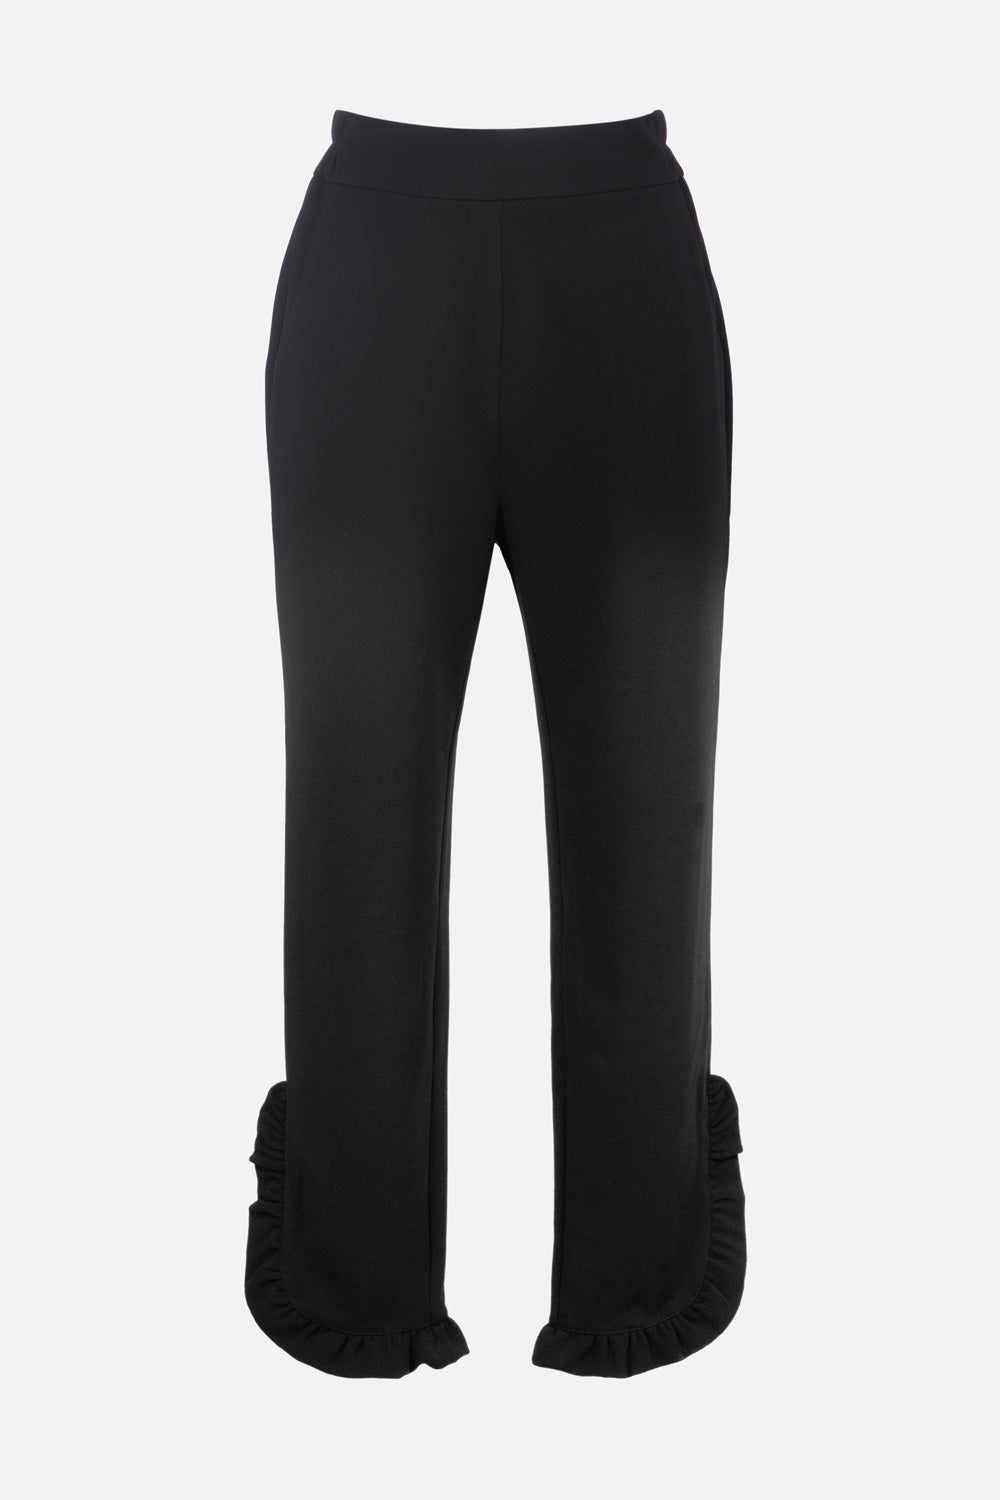 Corsair-inspired black pants